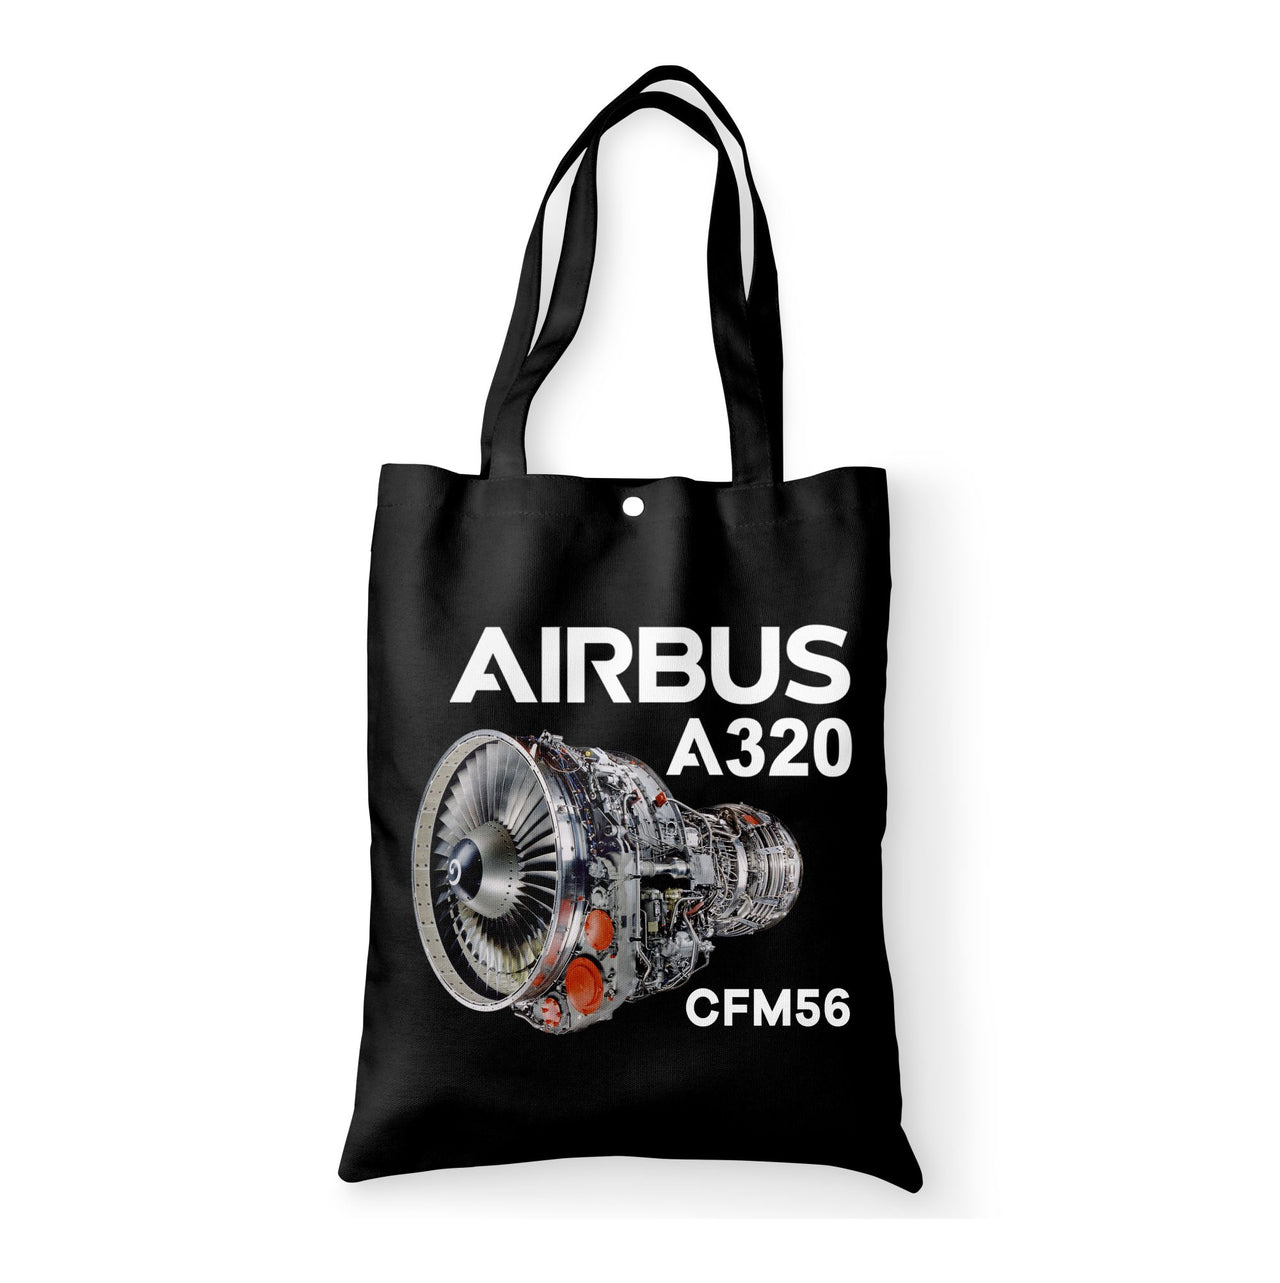 Airbus A320 & CFM56 Engine Designed Tote Bags